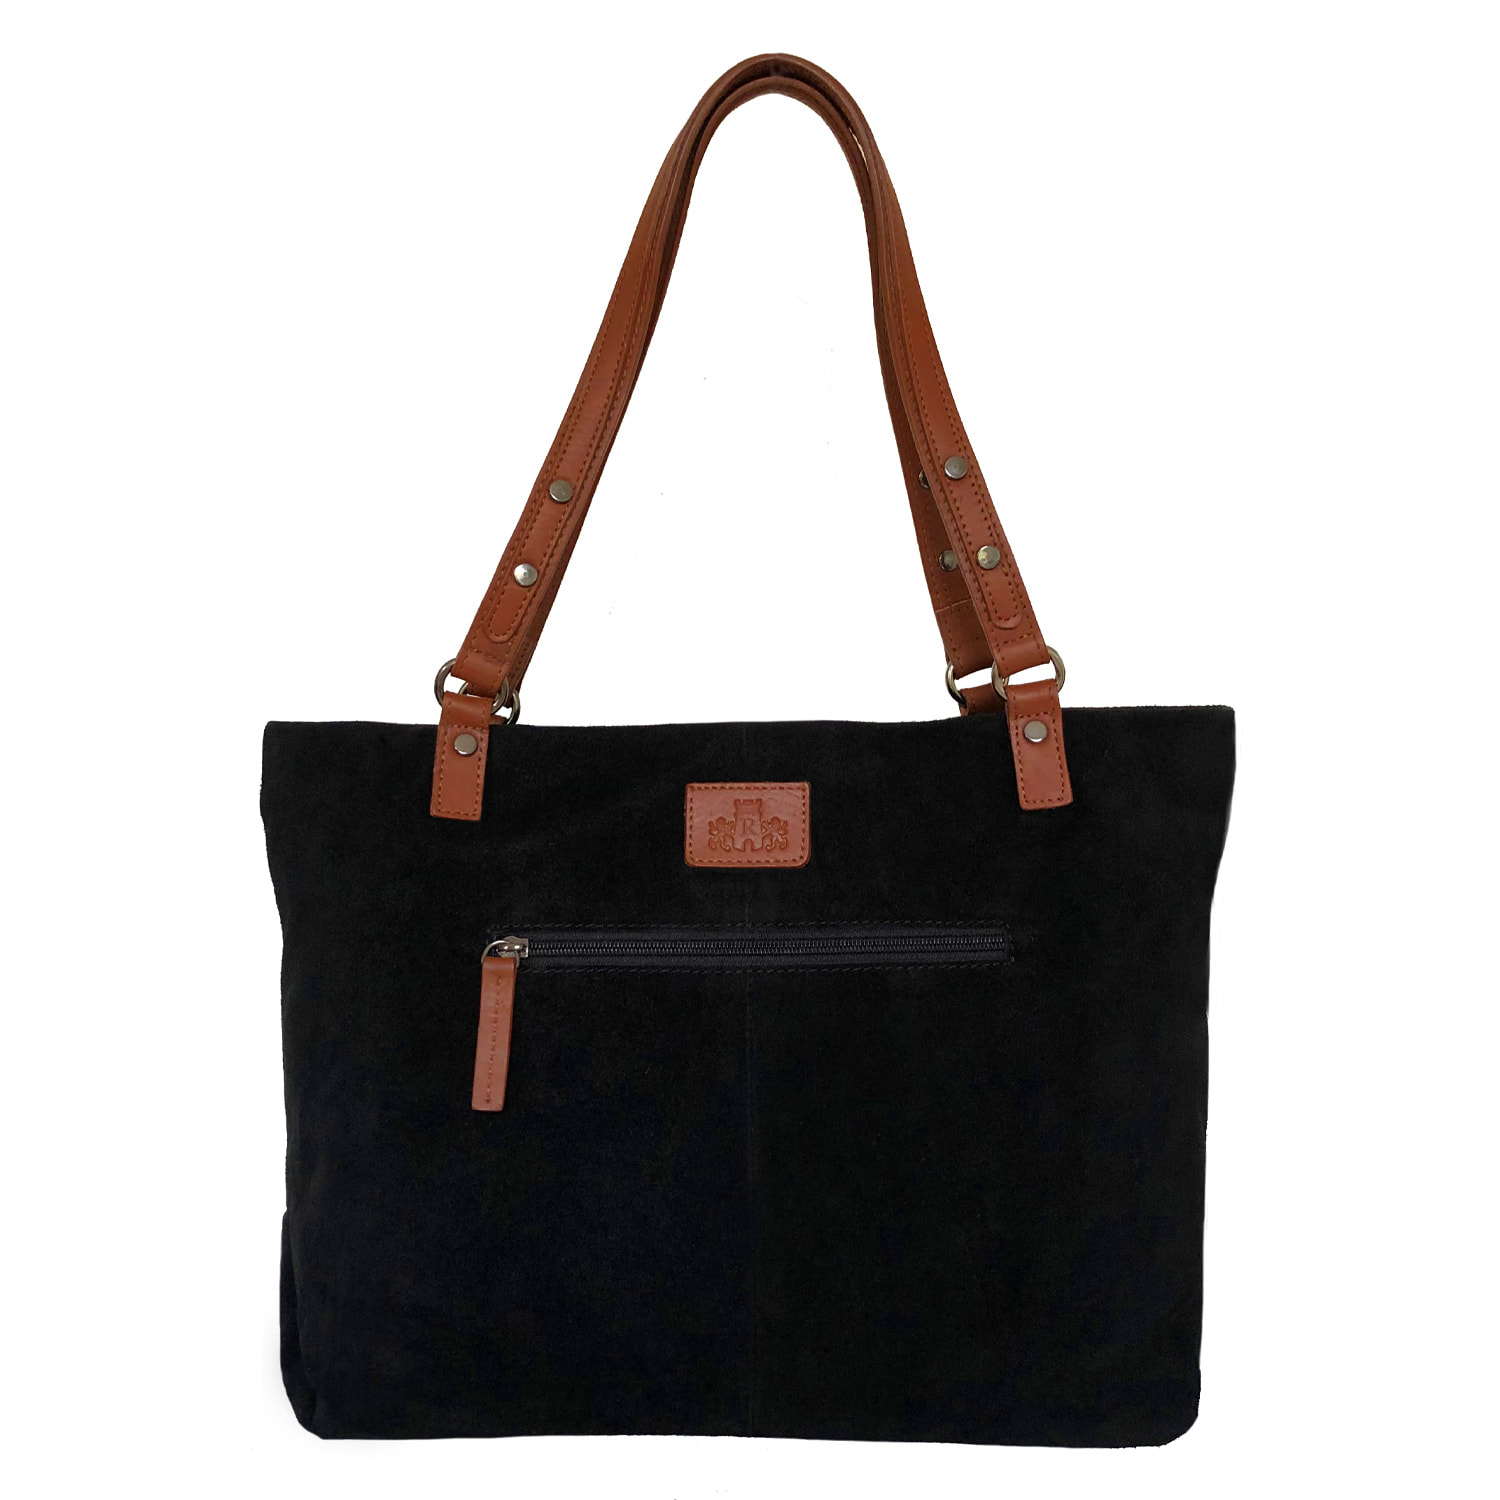 Rowallan Large Black Suede Leather Handbag, Tote bag, Shoulder Bag - SALE